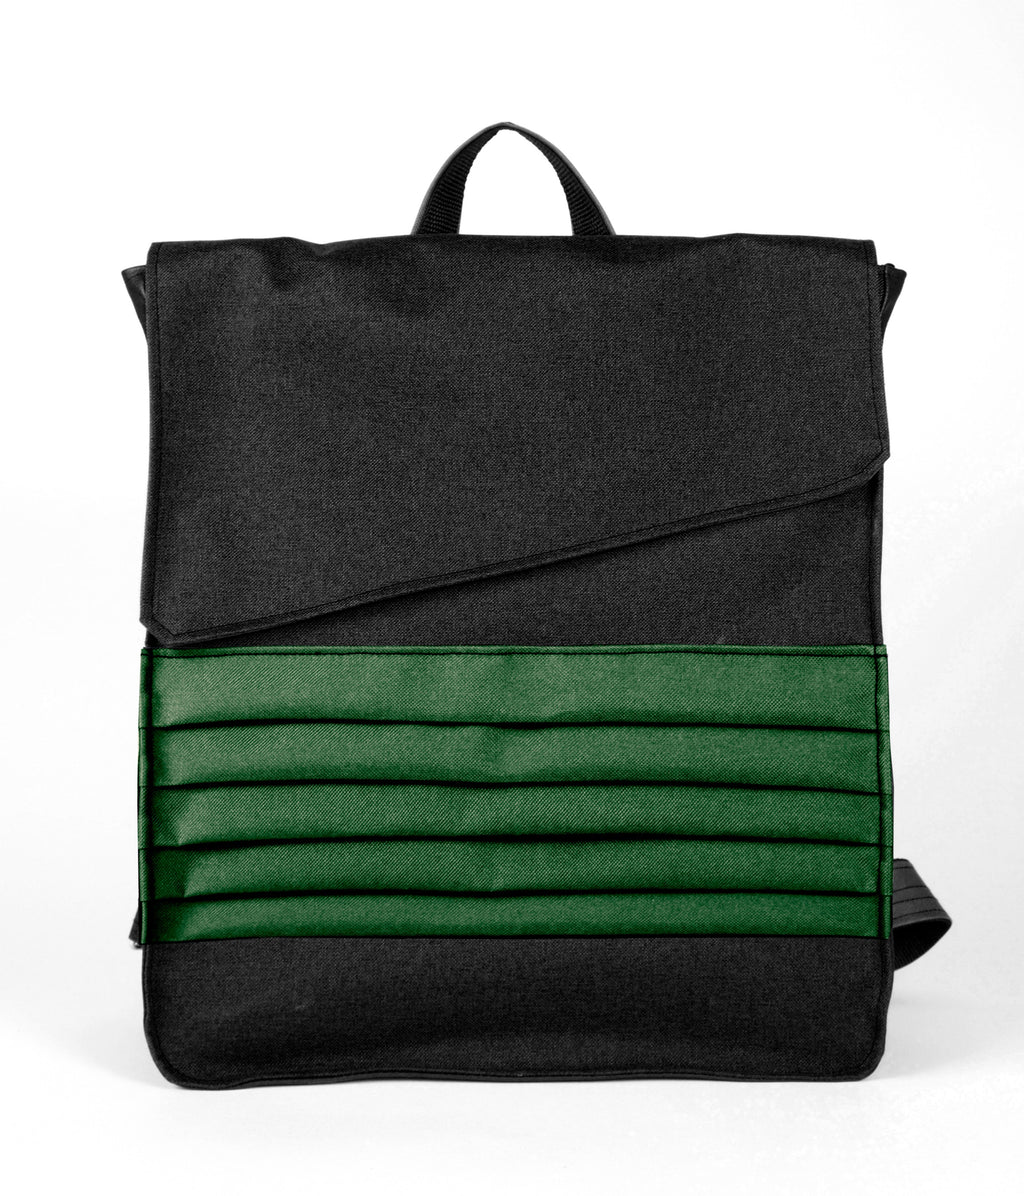 Bardo work backpack - black&green - Premium Bardo work backpack from BARDO ART WORKS - Just lvblue, dark blue, handemade, laptop backpack, unisex, vegan leather, water proof, work160! Shop now at BARDO ART WORKS